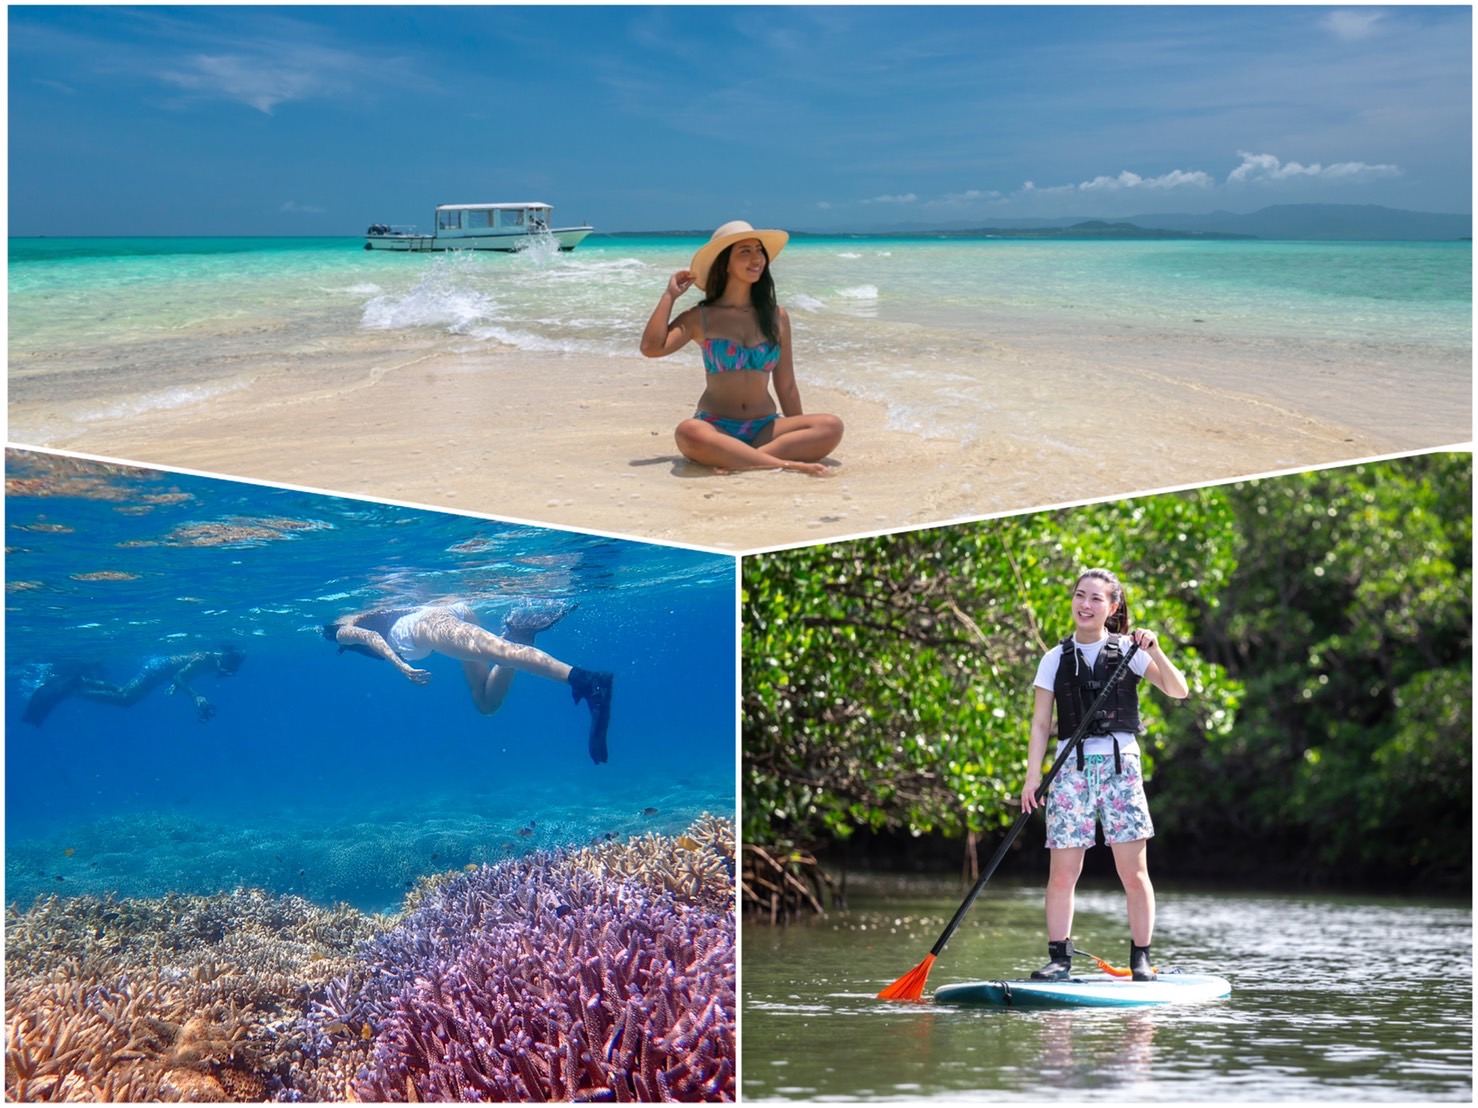 Two attractions of Ishigaki Island! Mangrove tour by SUP or Canoe & Phantom Island Snorkeling